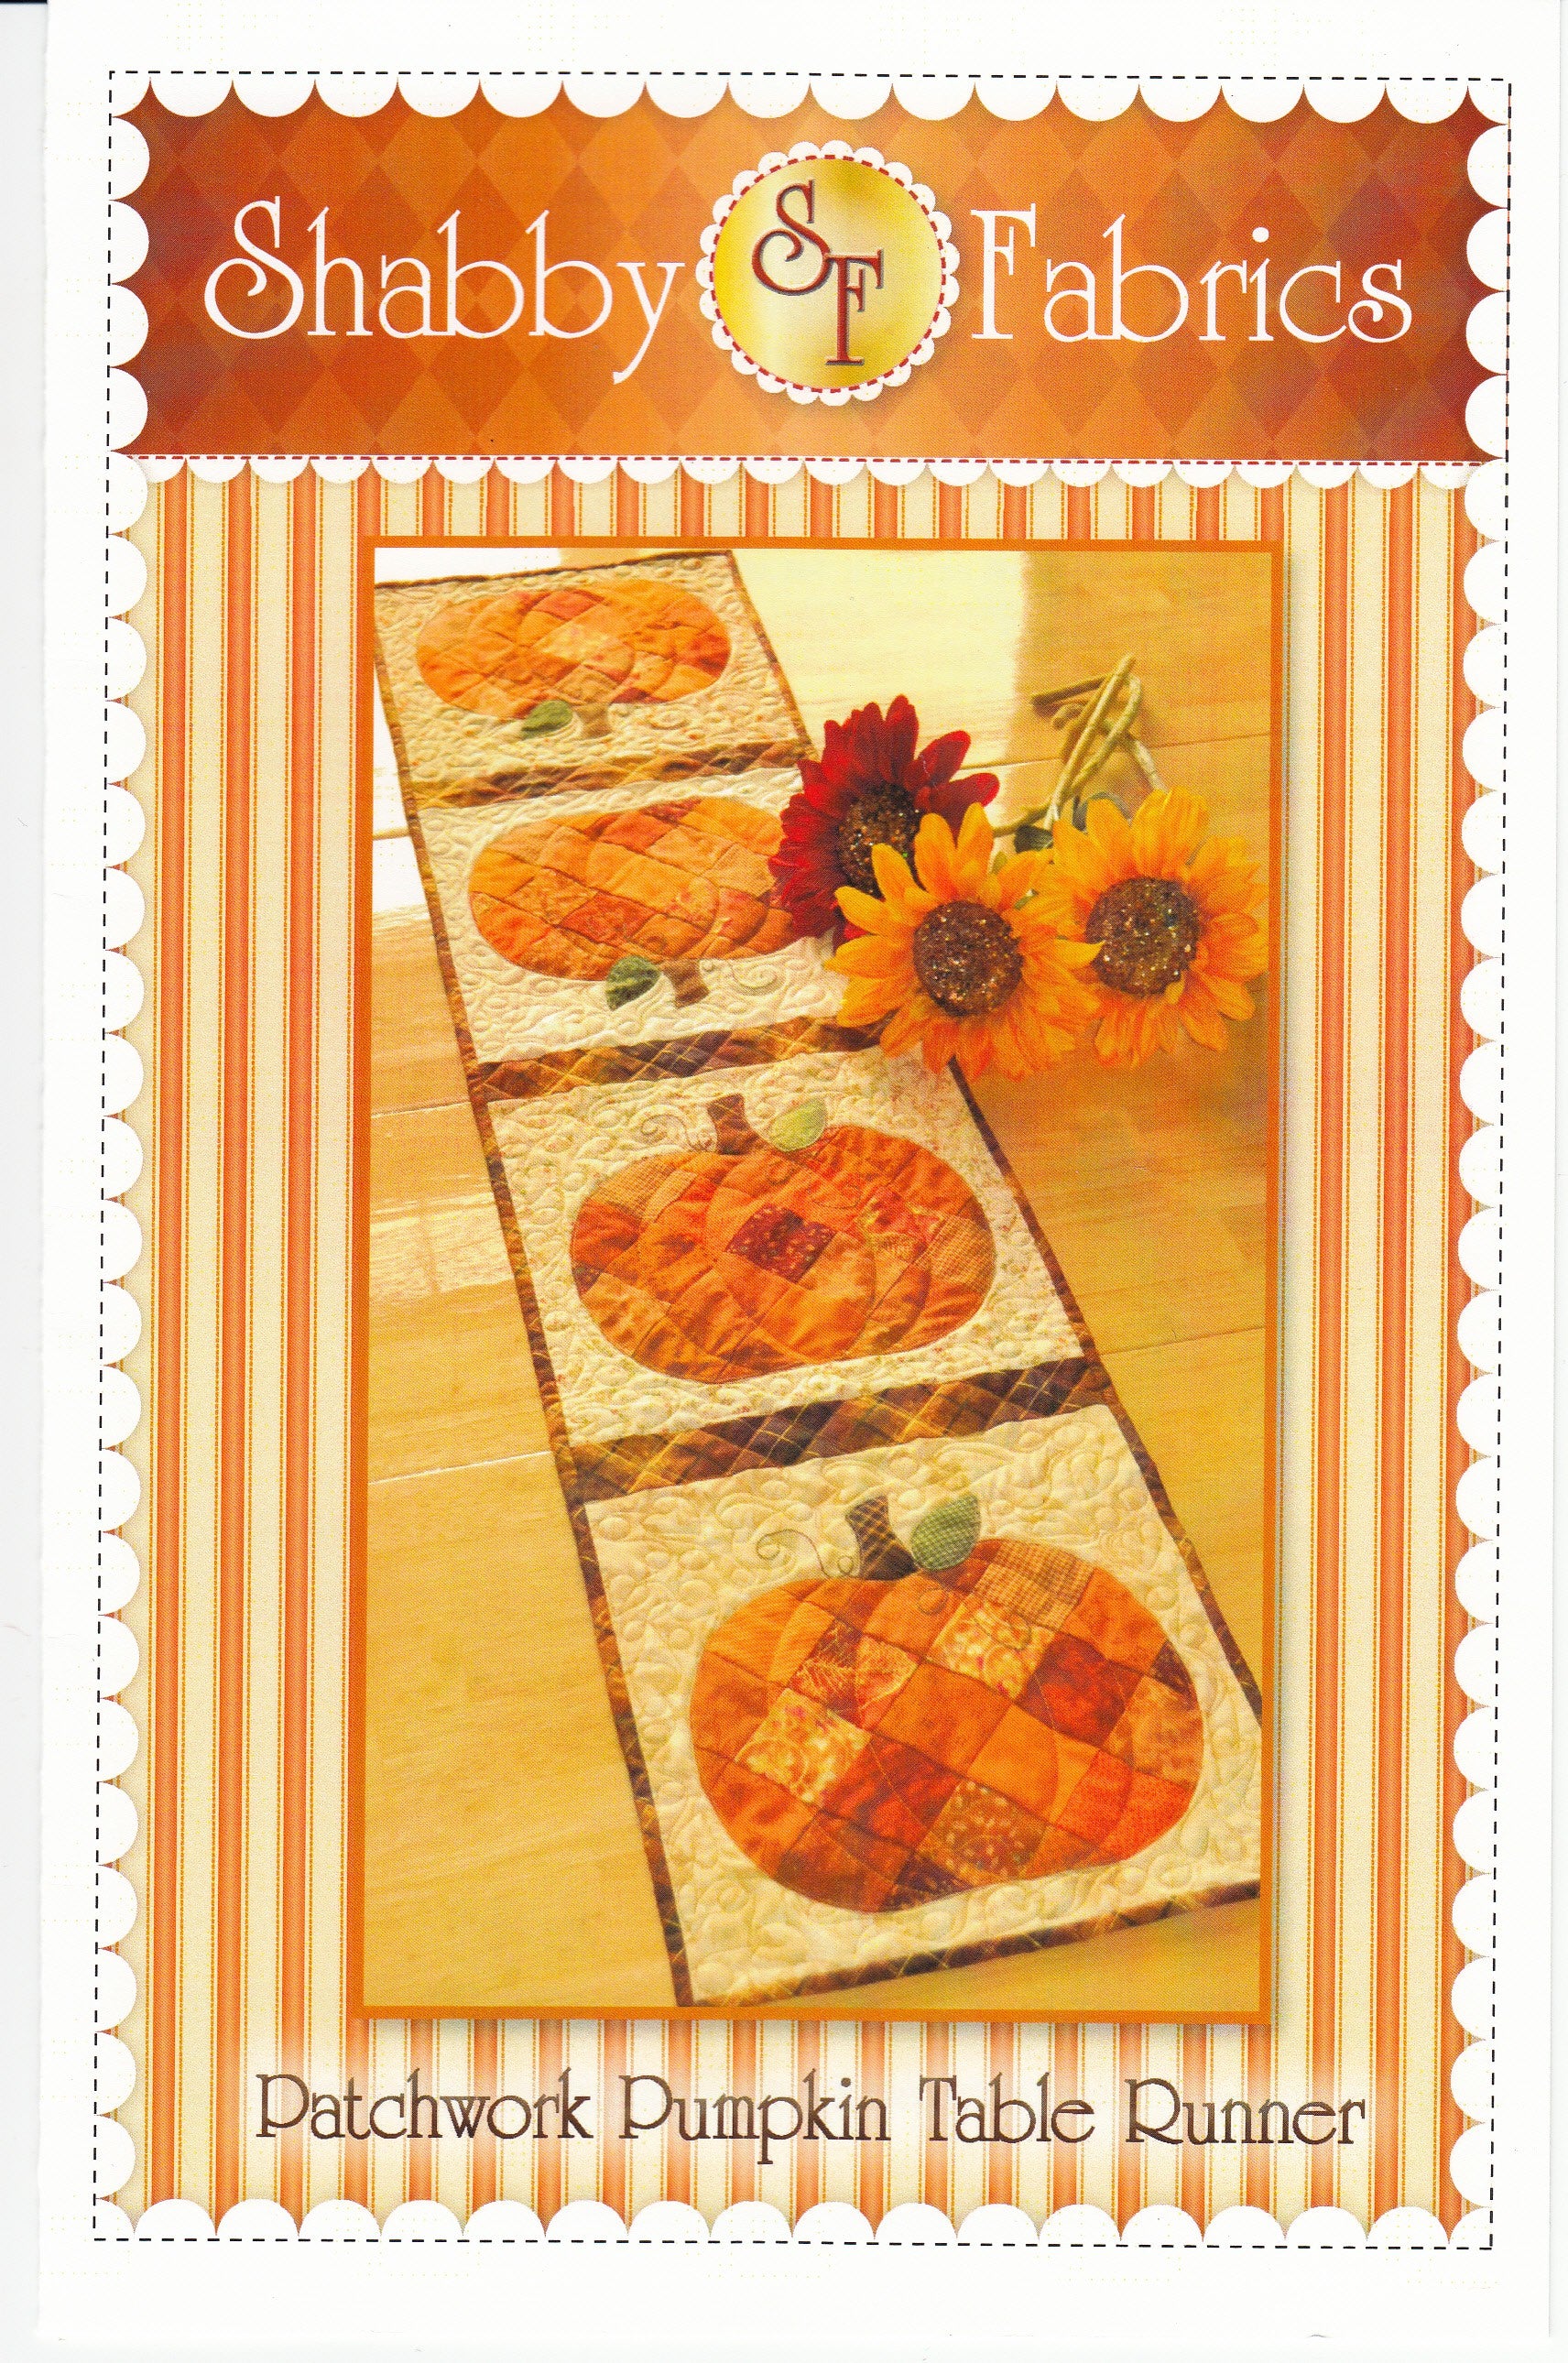 Patchwork Pumpkin Table Runner Quilt Pattern by Jennifer Bosworth for Shabby Fabrics